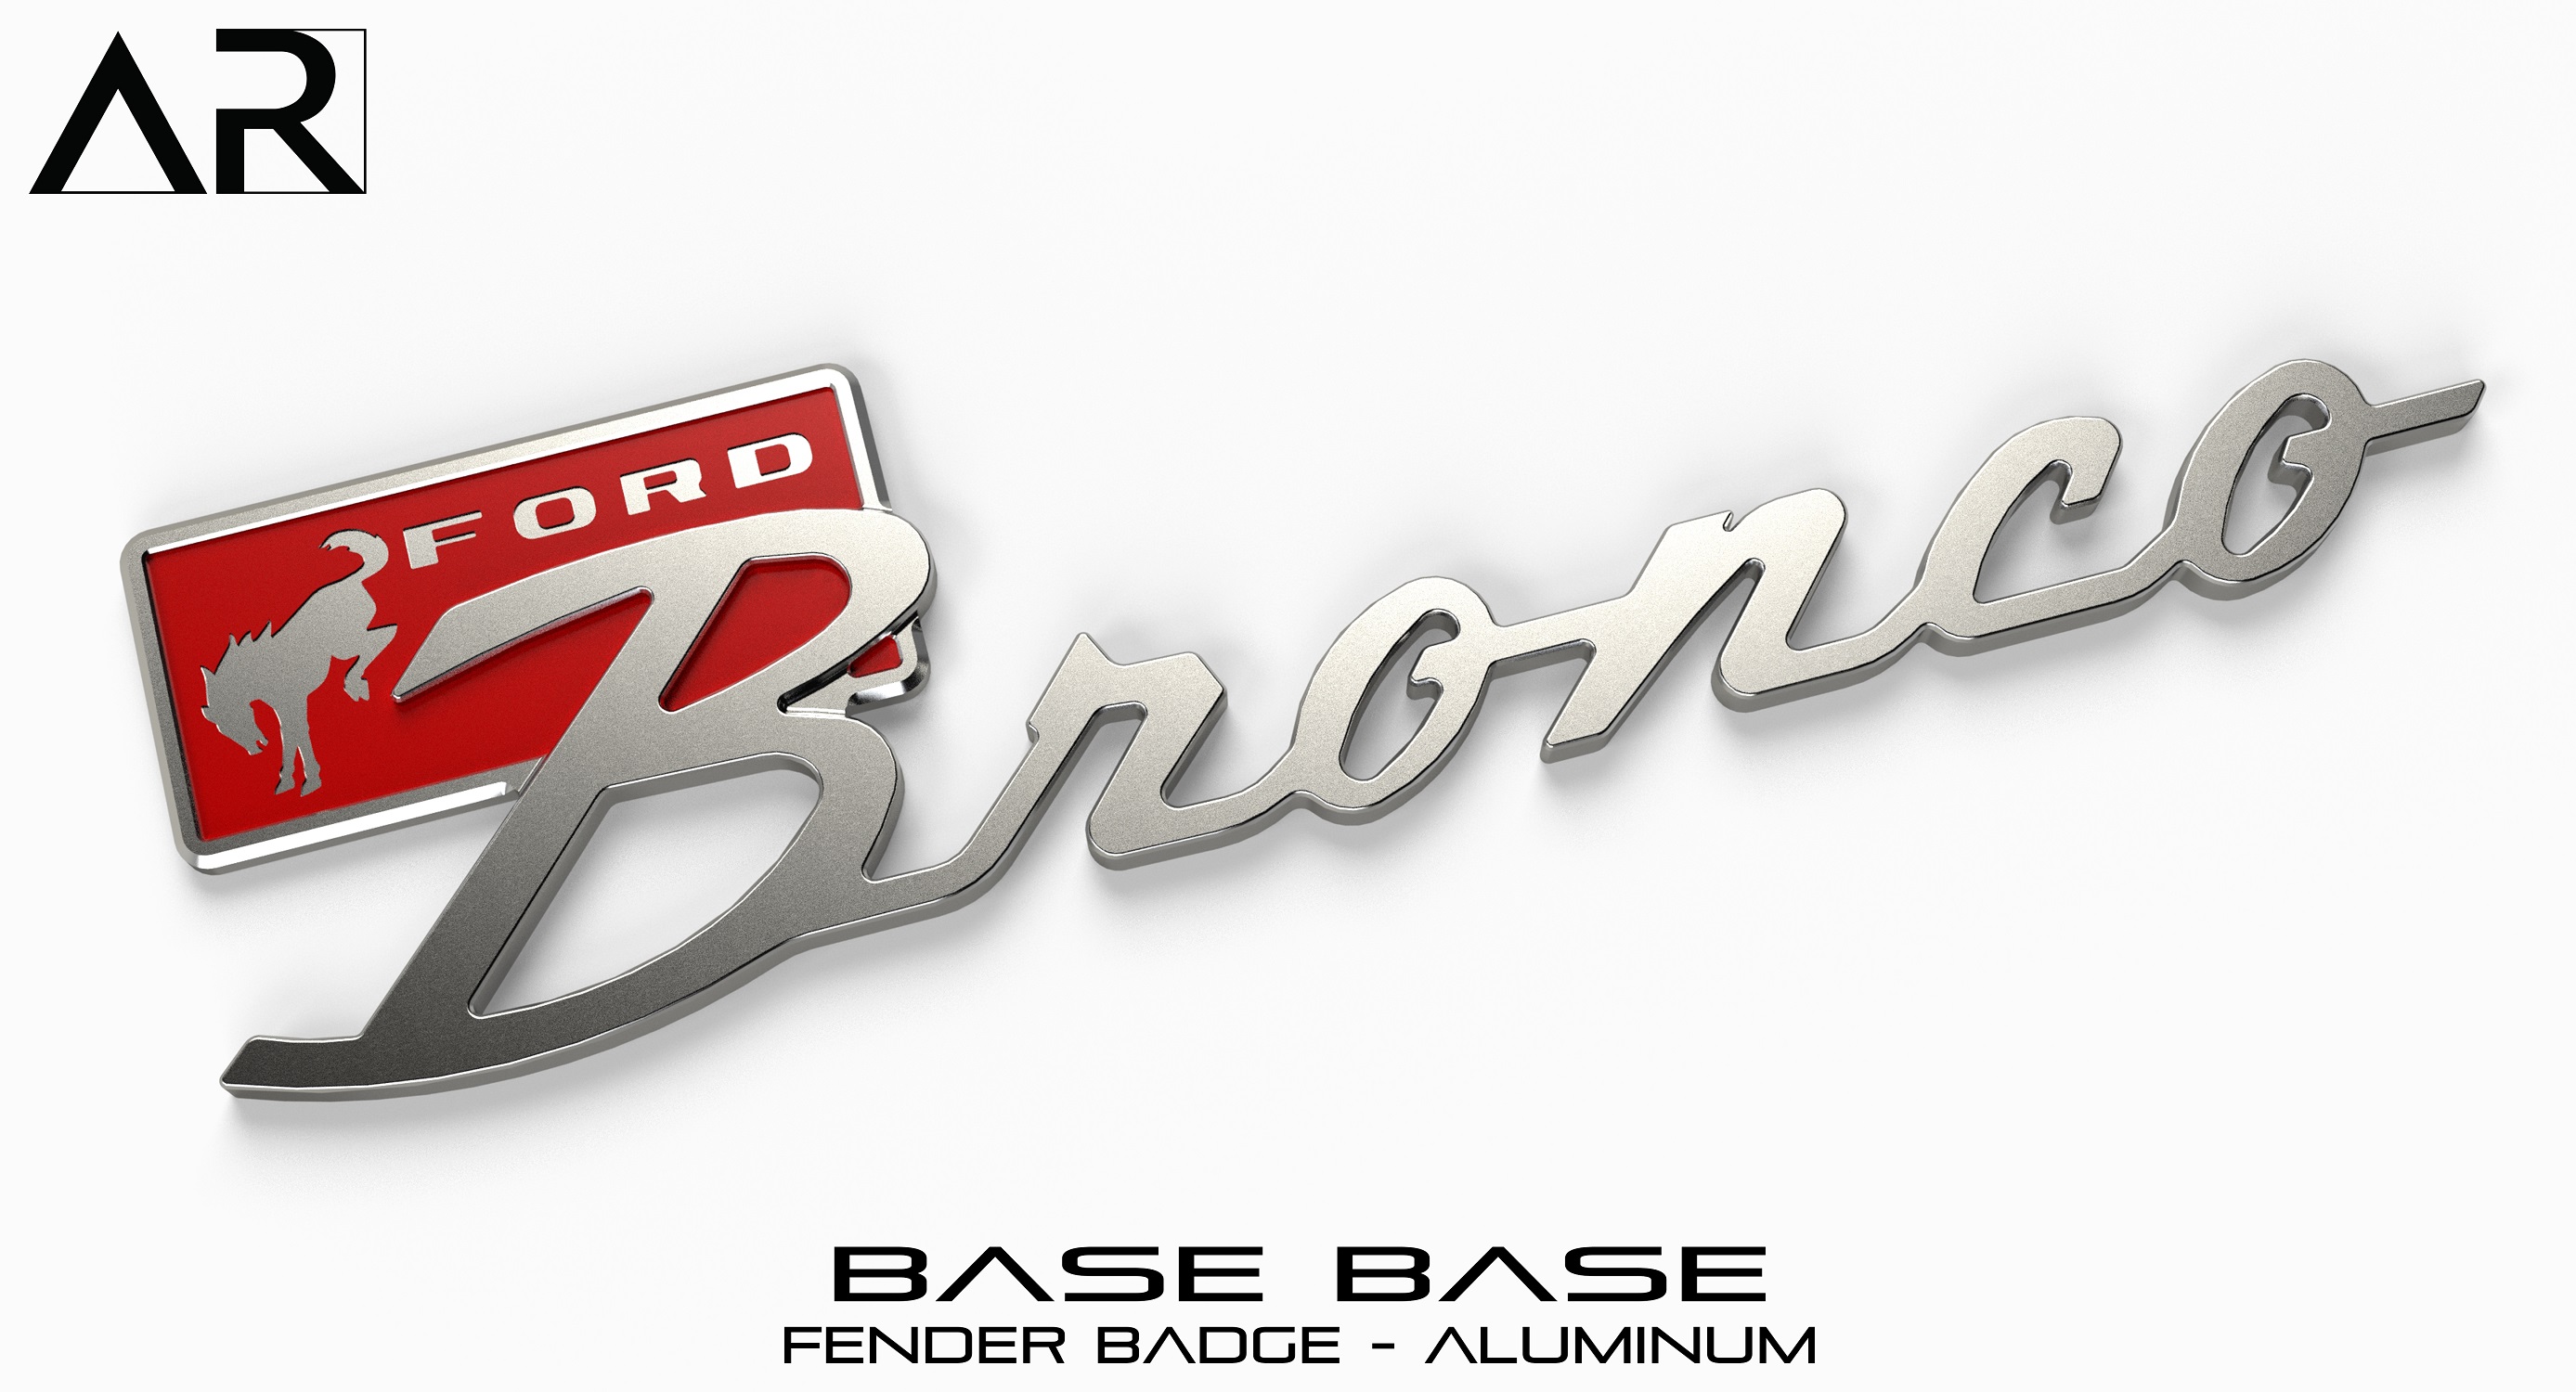 Ford Bronco AR | BRONCO CLASSIC DNA Fender Badge 16010012 - Fender Badge - Base Base - Aluminum (2)